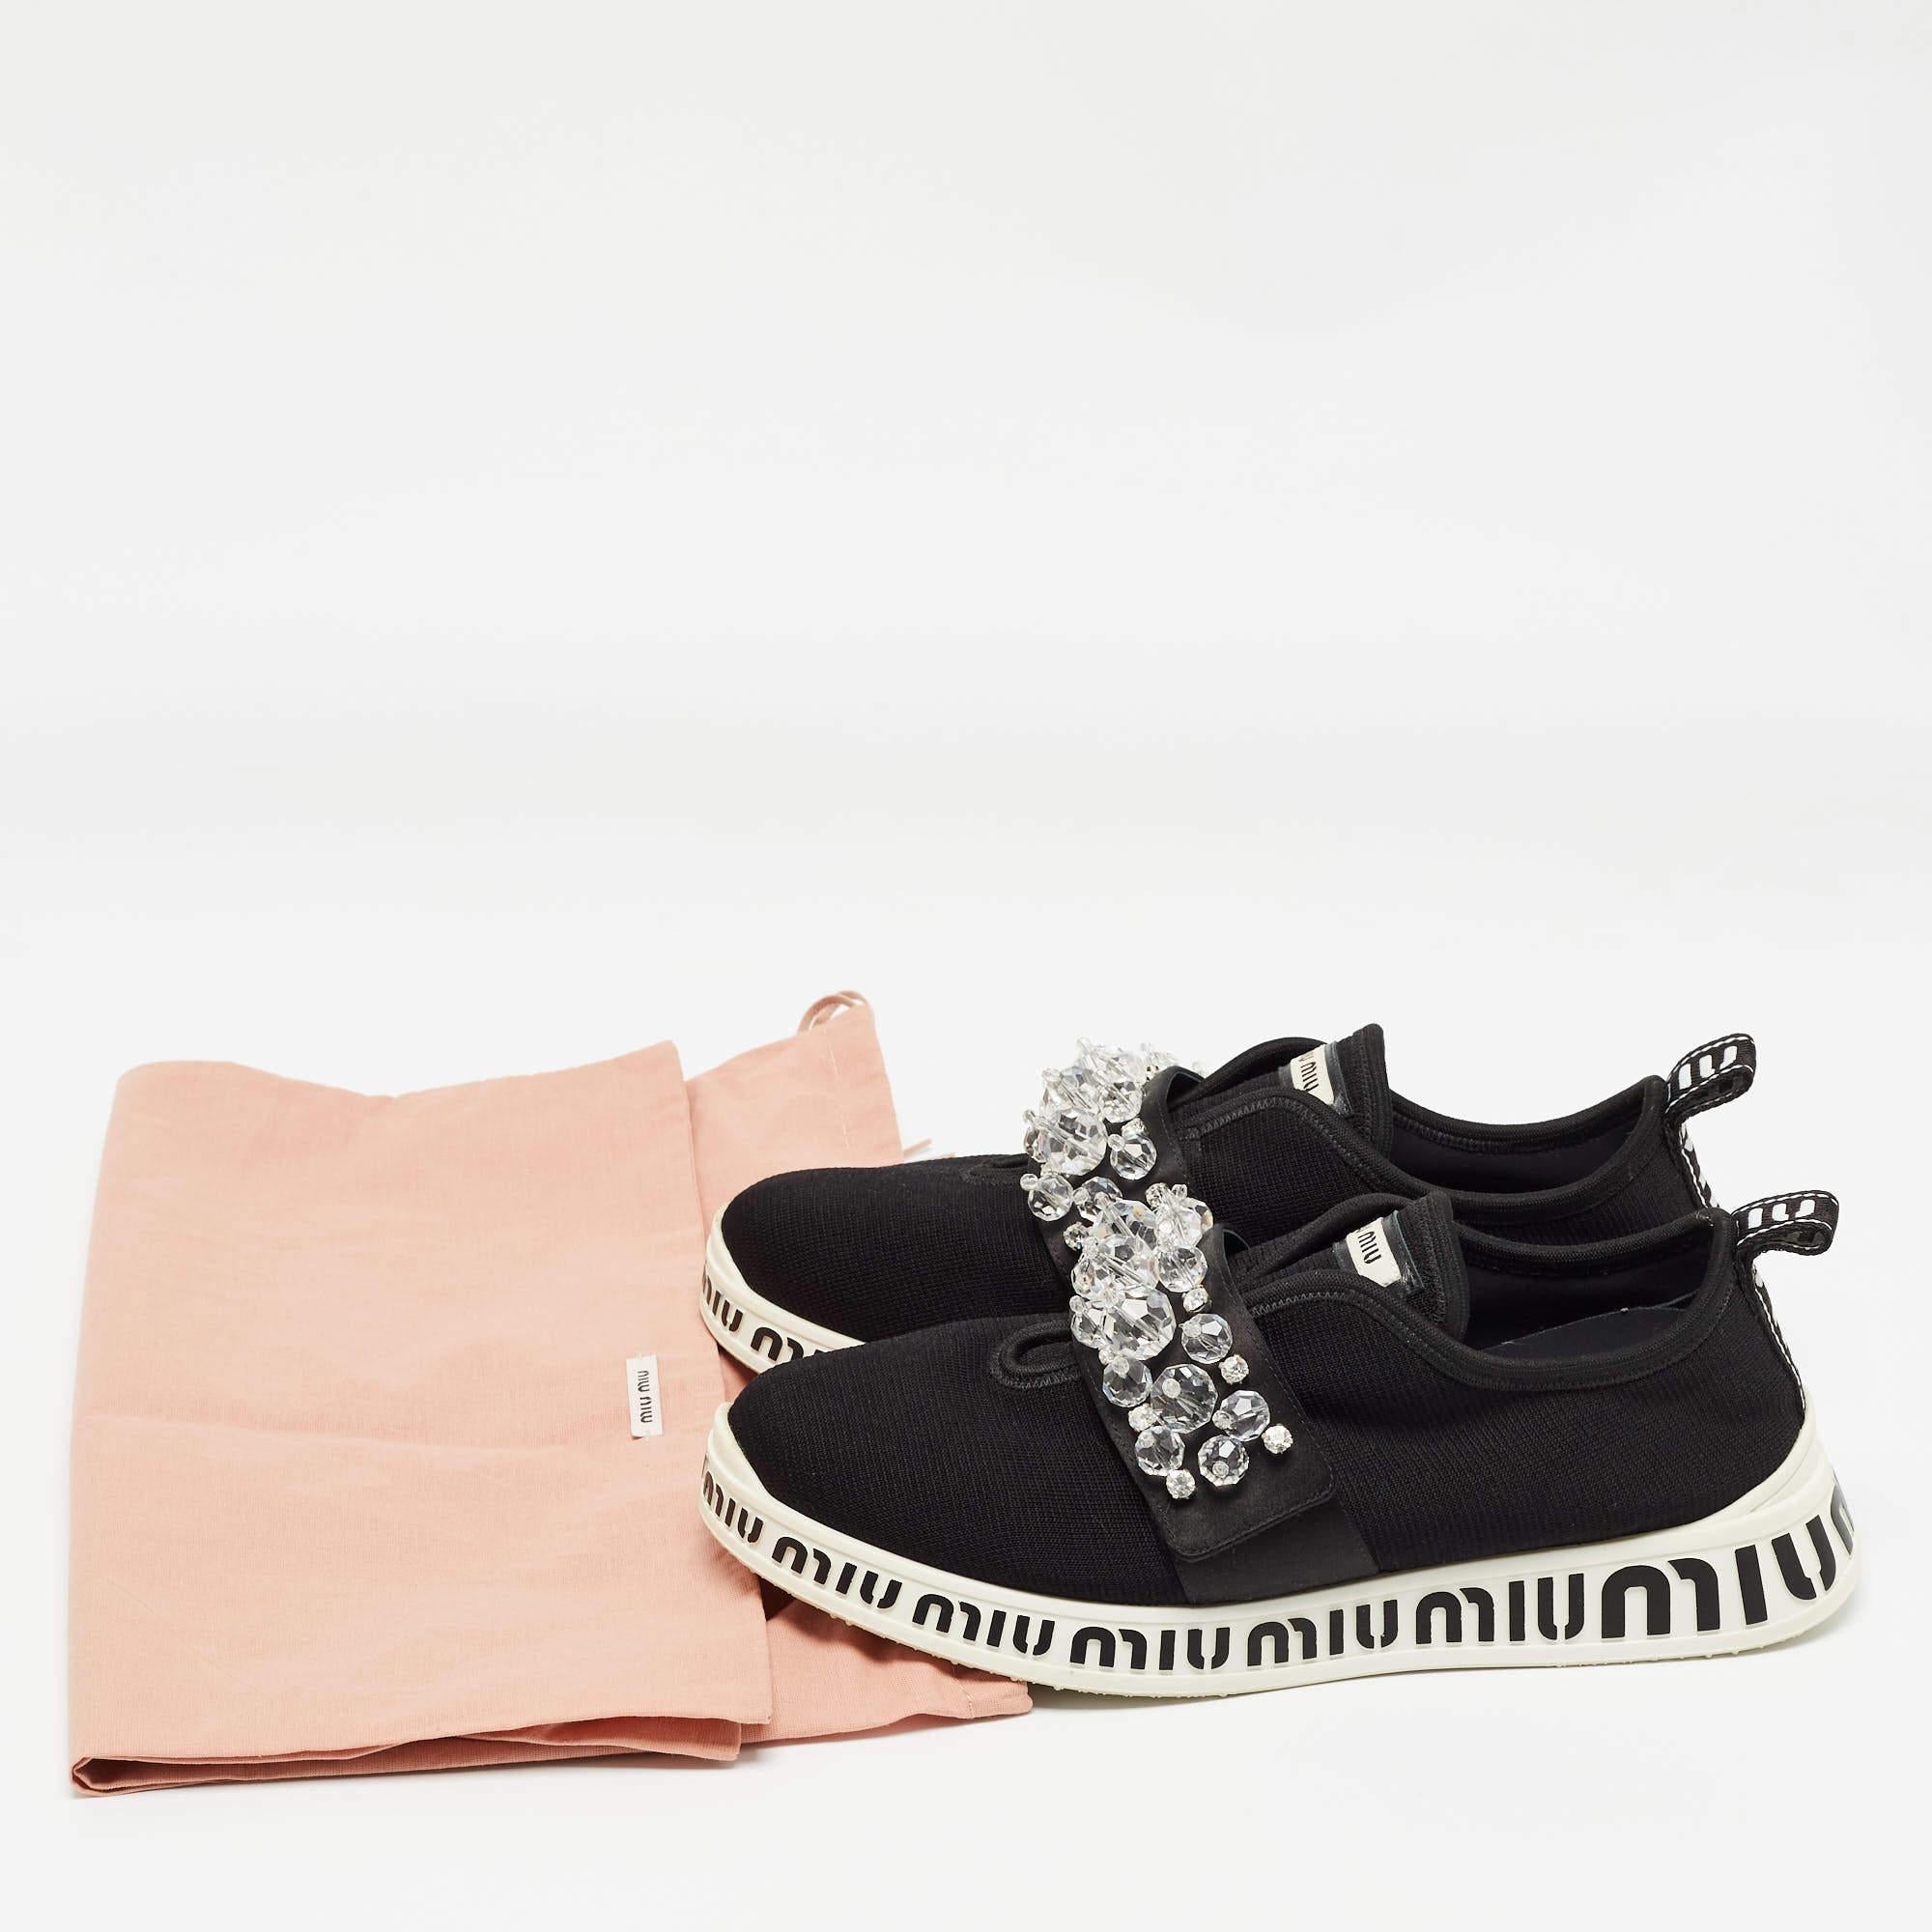 Miu Miu Black Fabric and Satin Crystal Embellished Slip On Sneakers Size 38.5 5